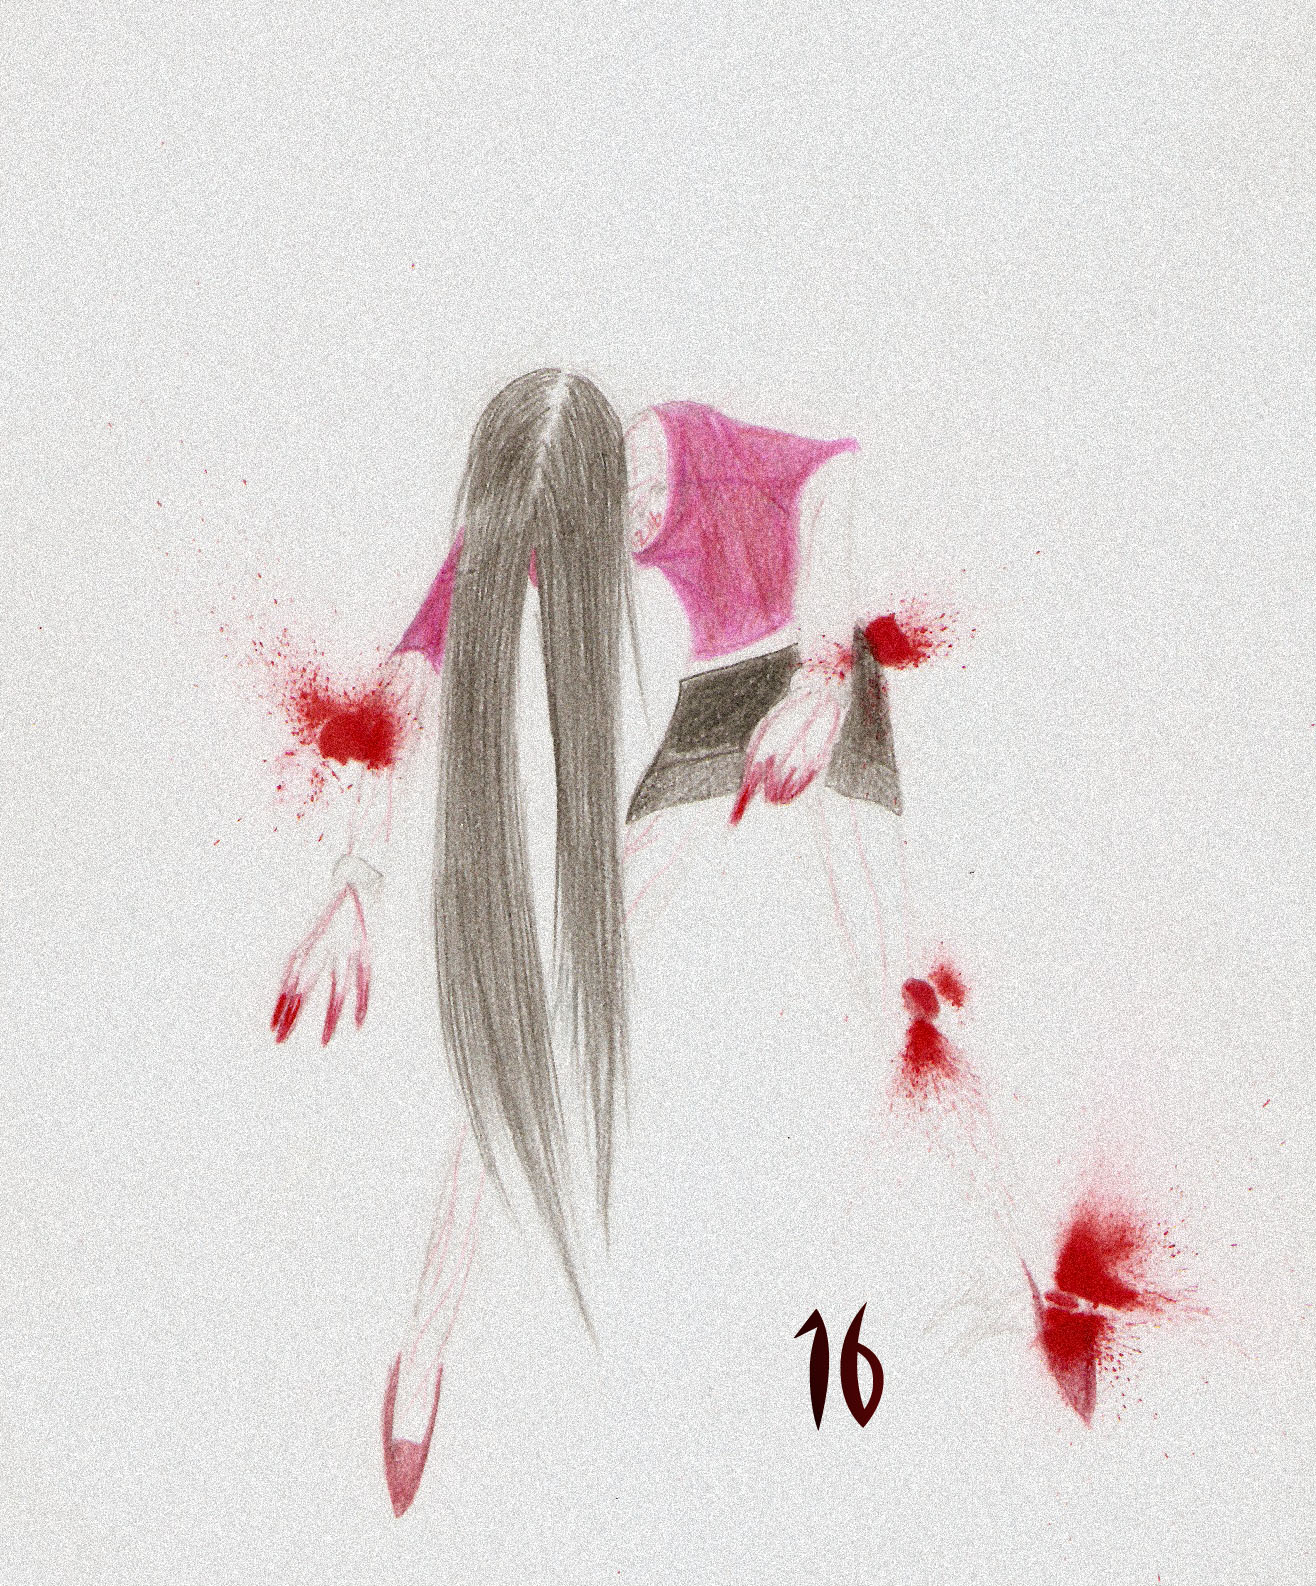 Victim Number Sixteen by Atashi